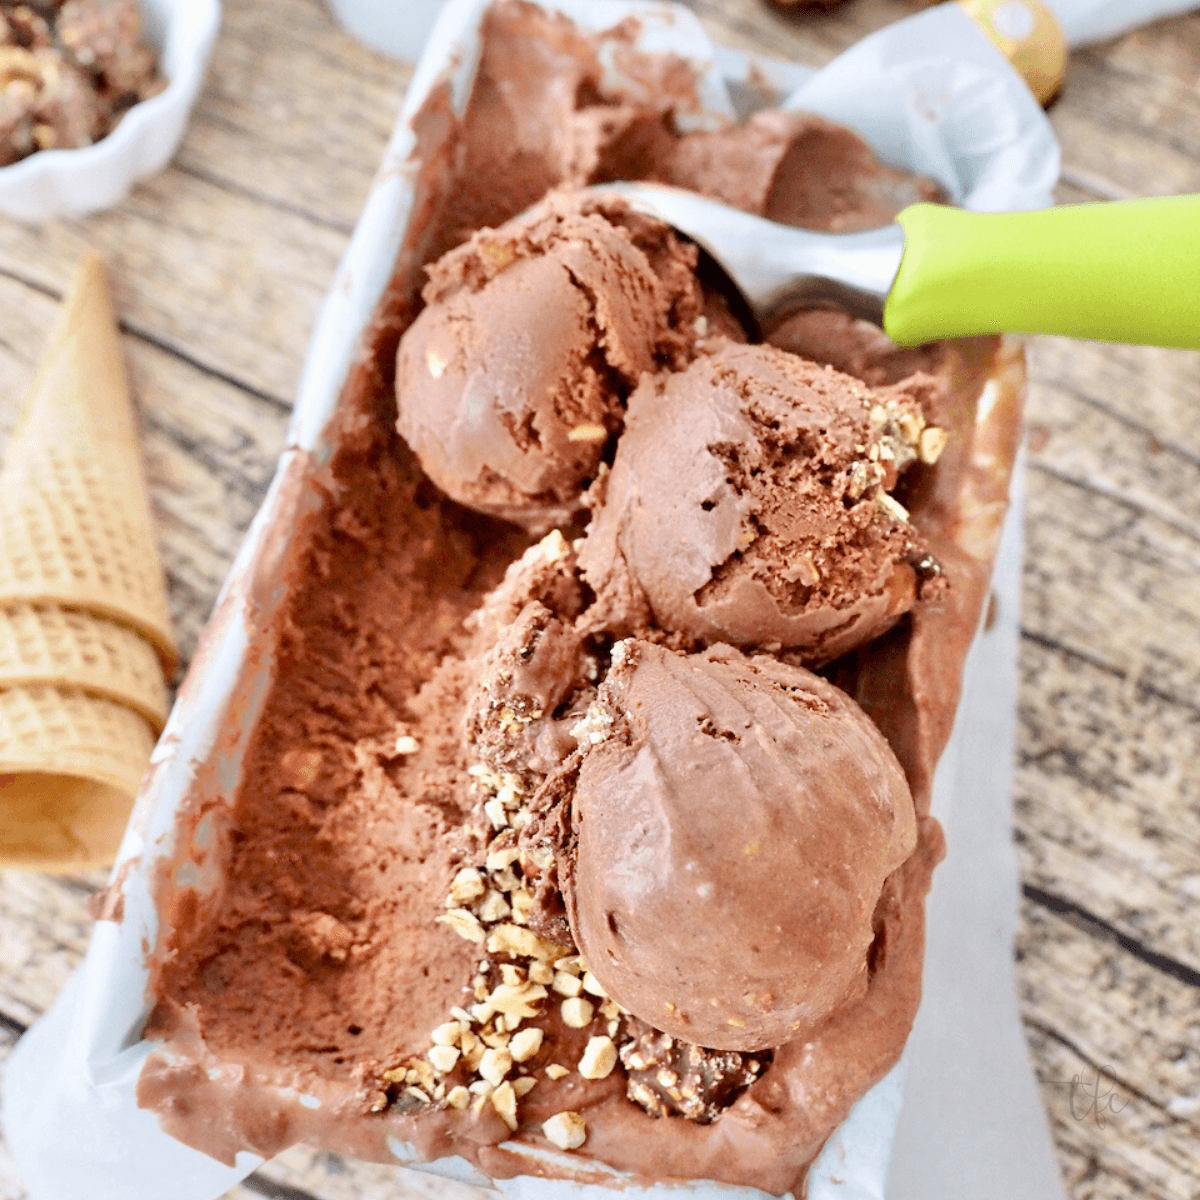 Decadent Ninja Creami Chocolate Ice Cream, Recipe